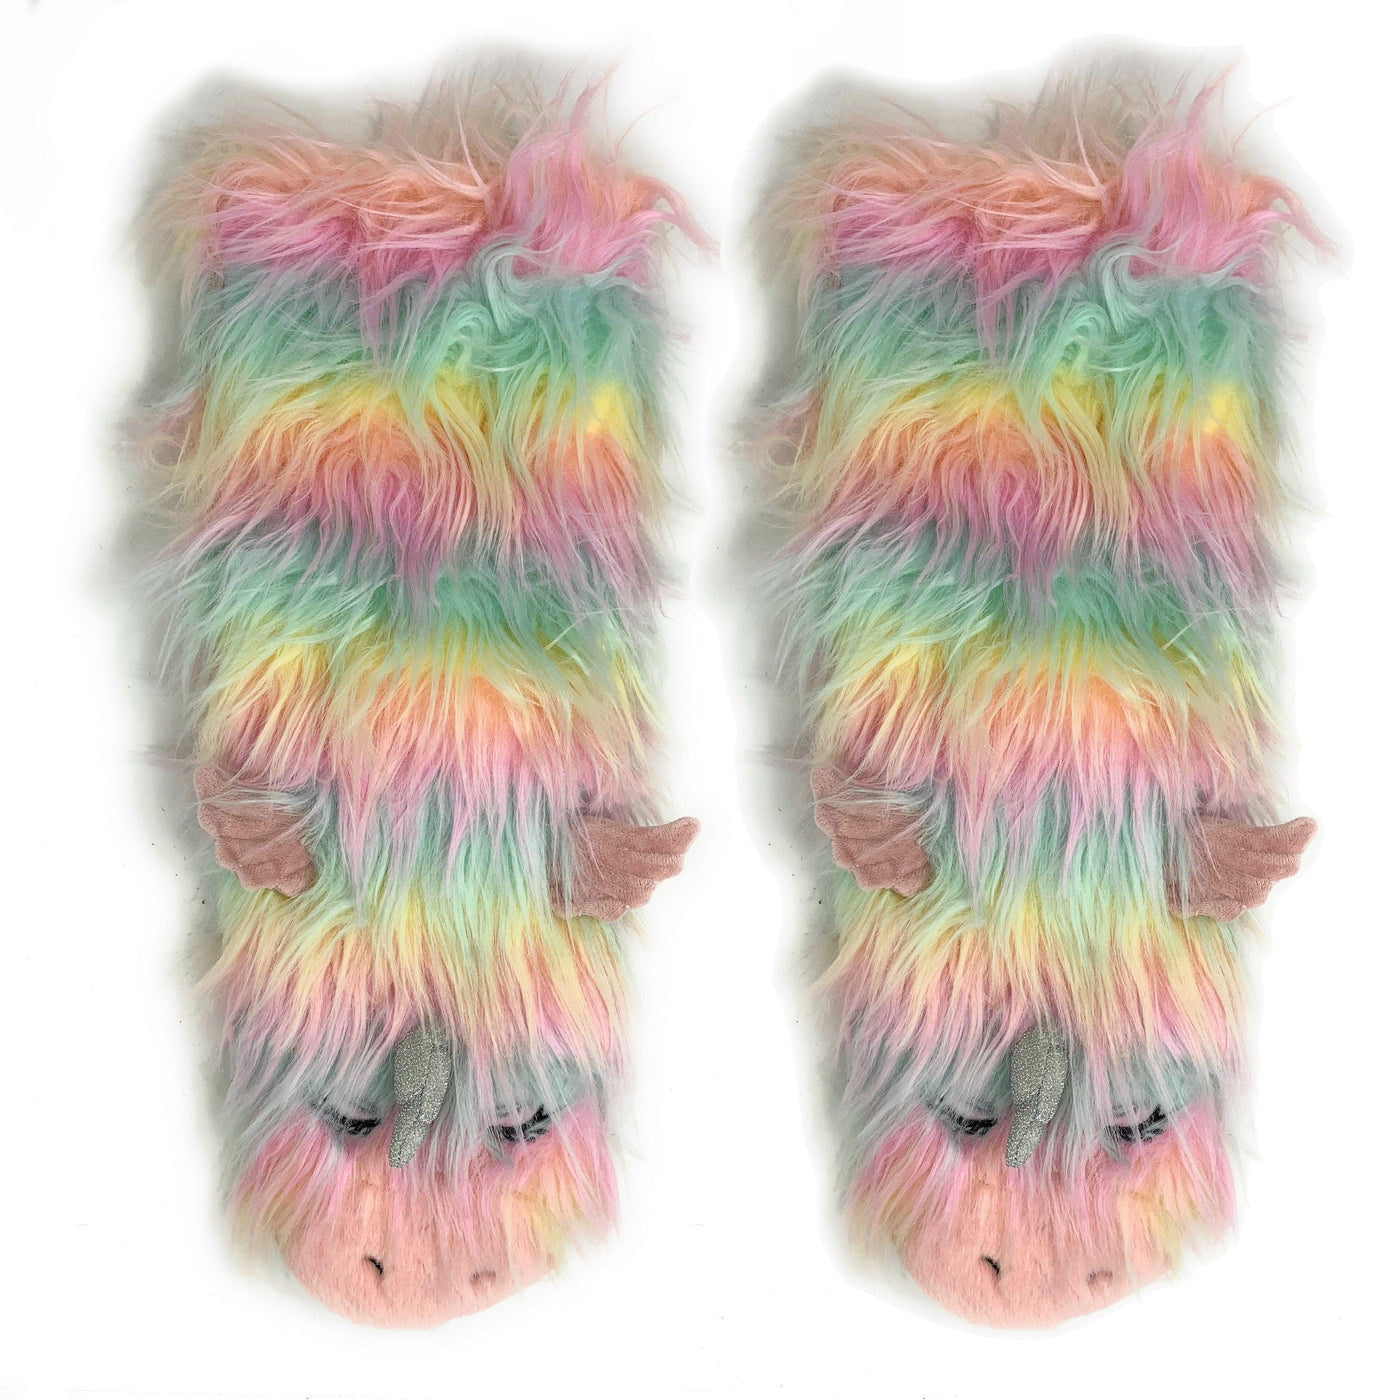 Funky Unicorn | Women's Slippers - Oooh Yeah - The Sock Monster